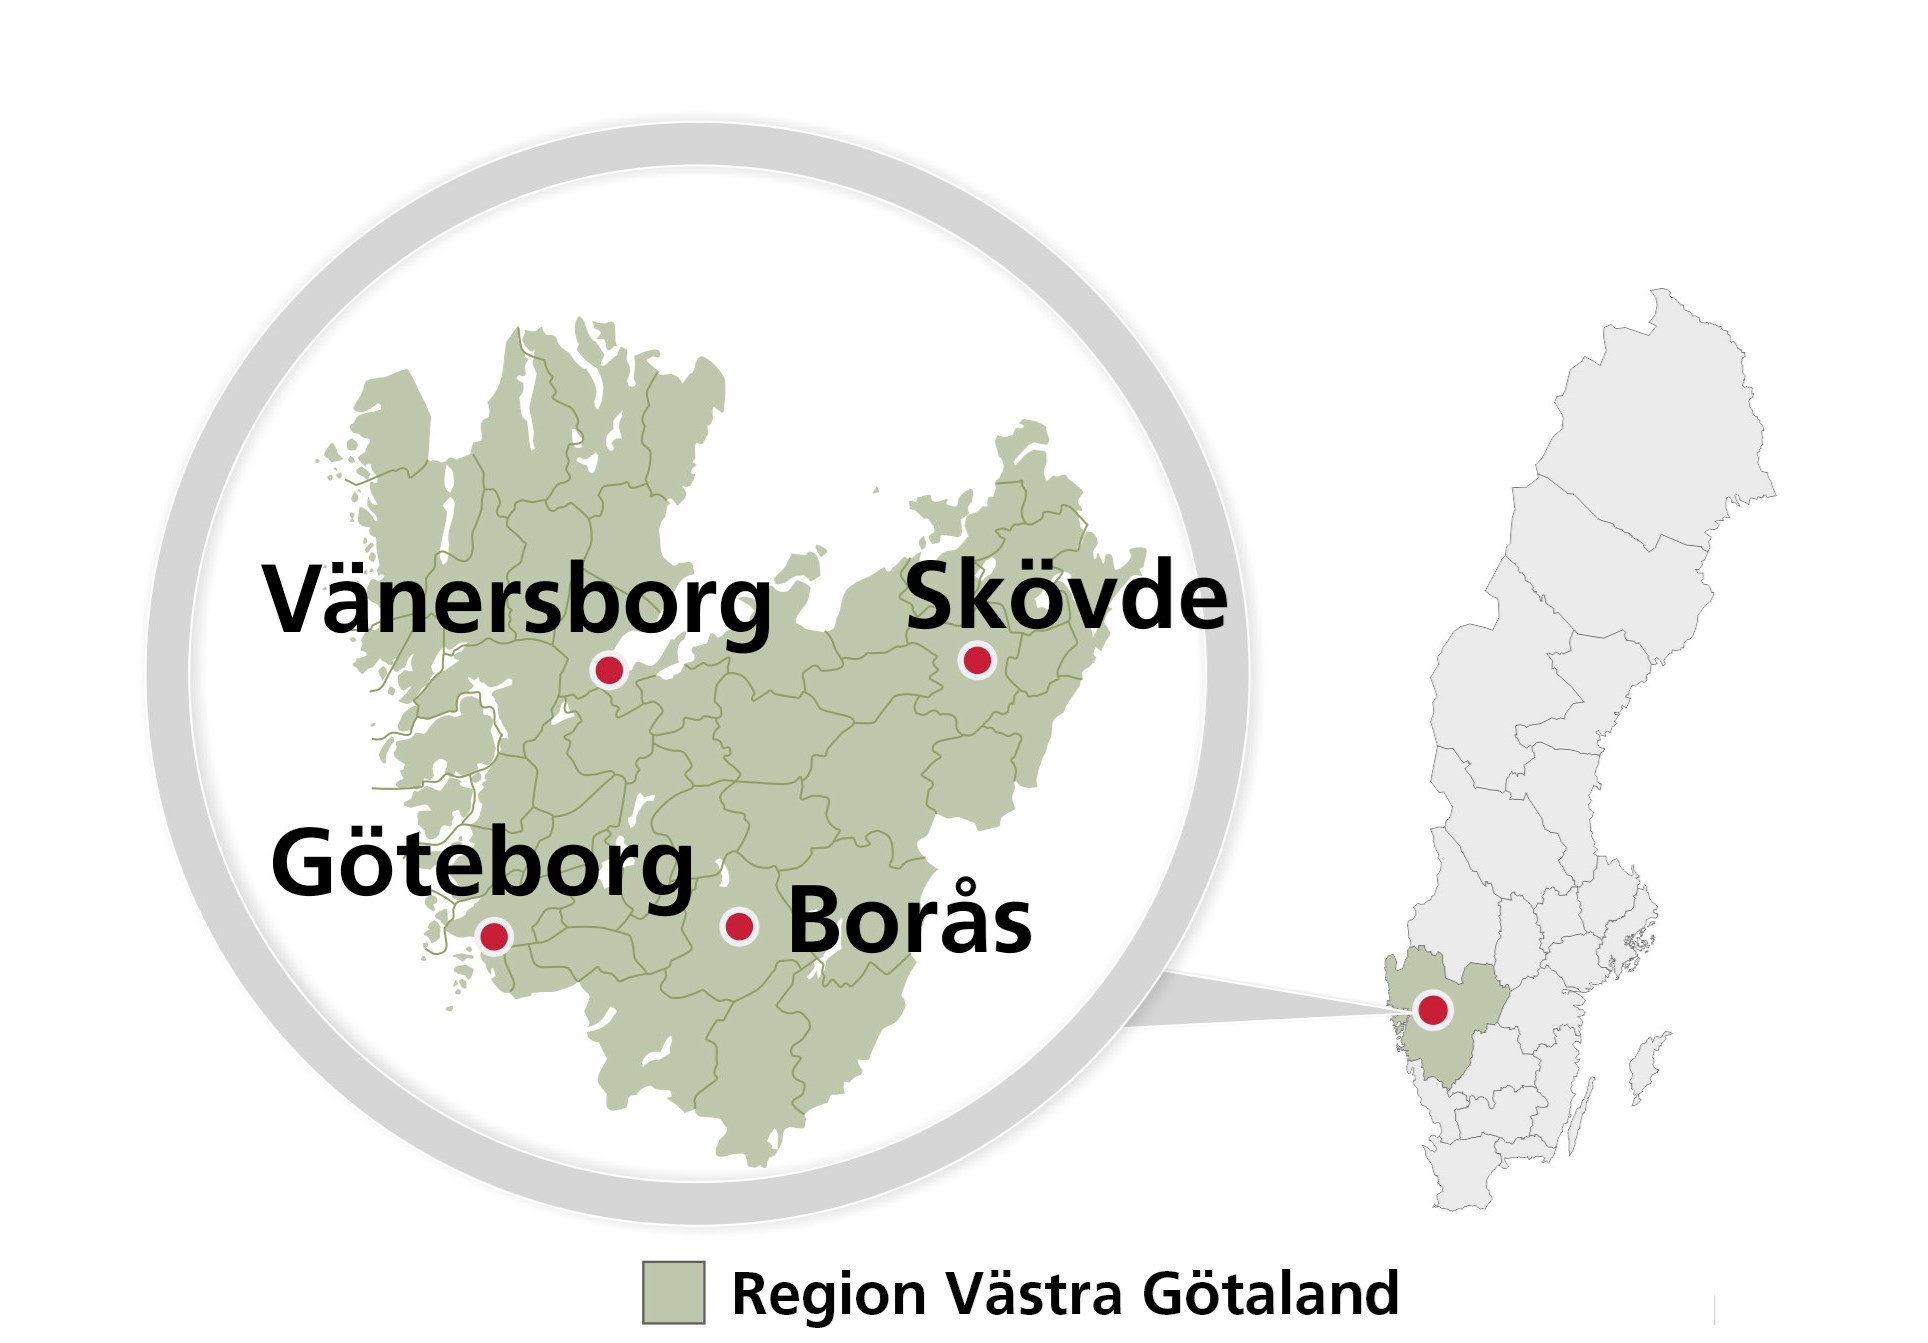 Map of sweden with detail over Region Västra Götaland